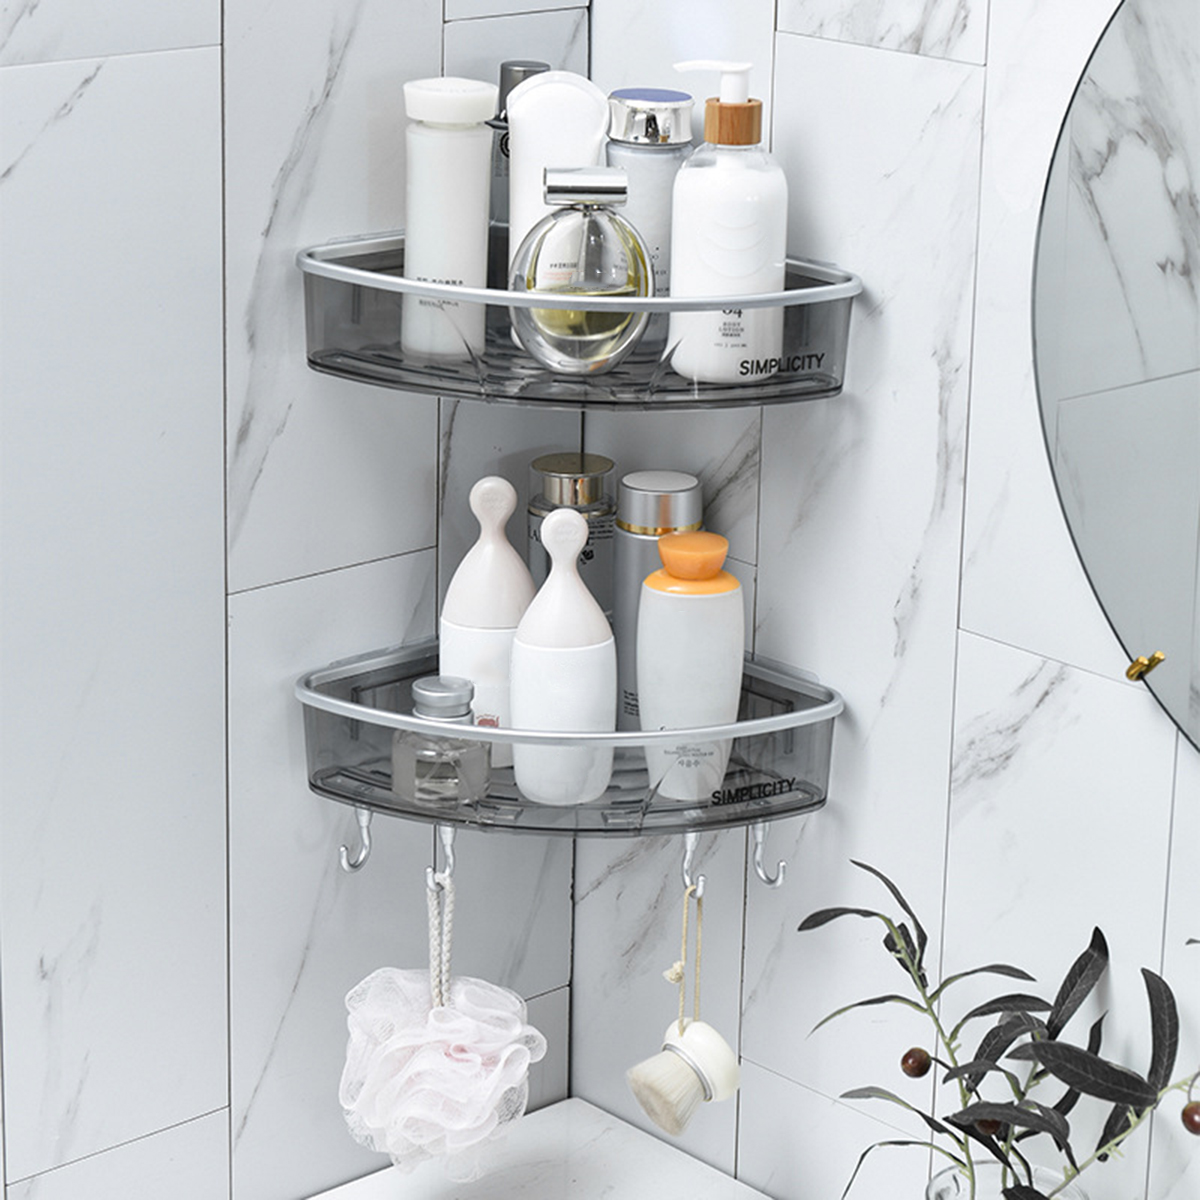 Find Bathroom Triangular Shower Shelf Corner Bath Storage Holder Rack With Hooker for Sale on Gipsybee.com with cryptocurrencies